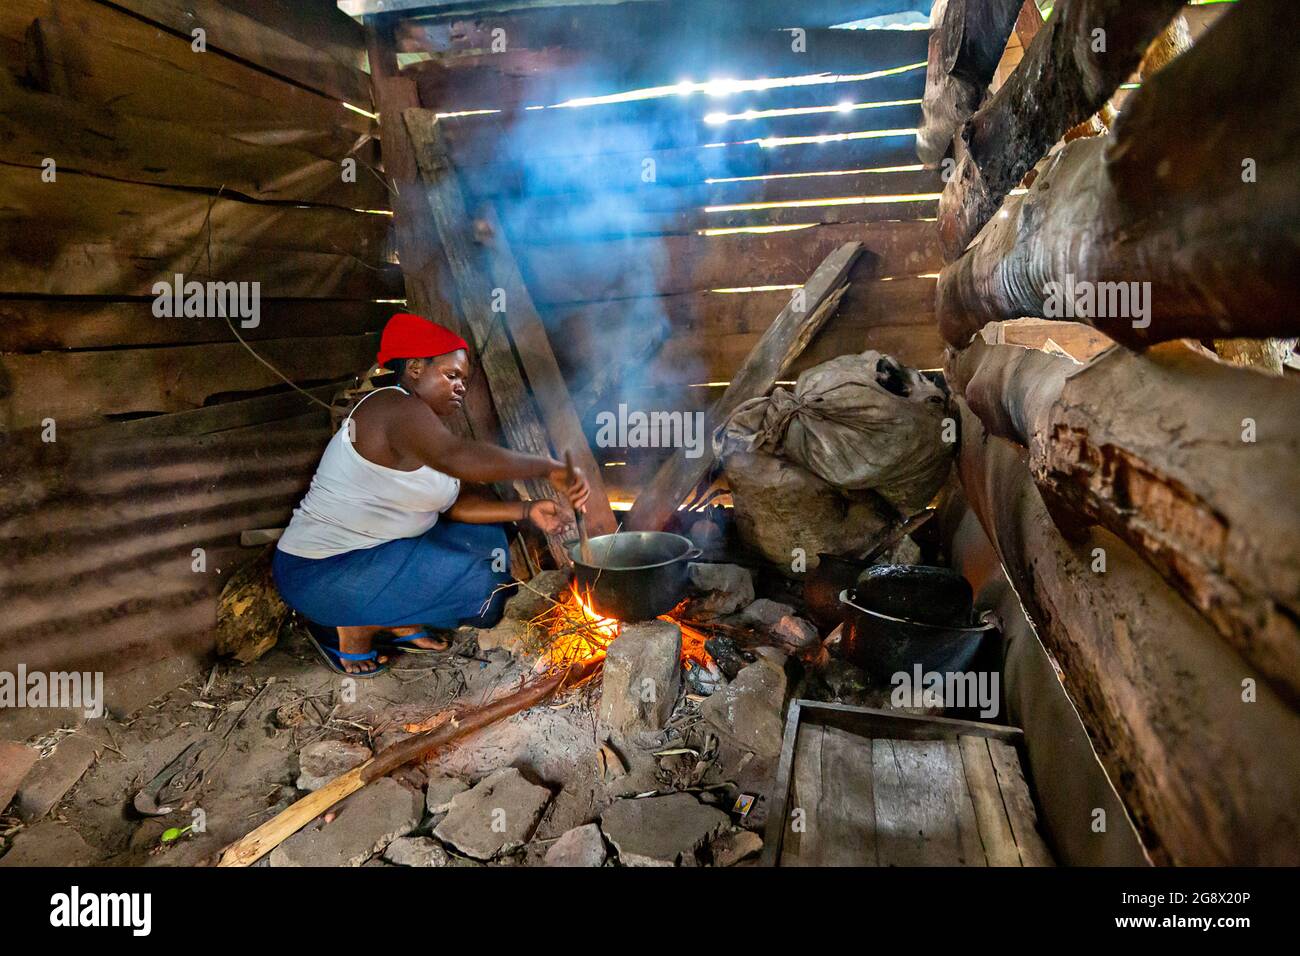 Local woman lighting the fire in the village hut in Kibale, Uganda Stock Photo